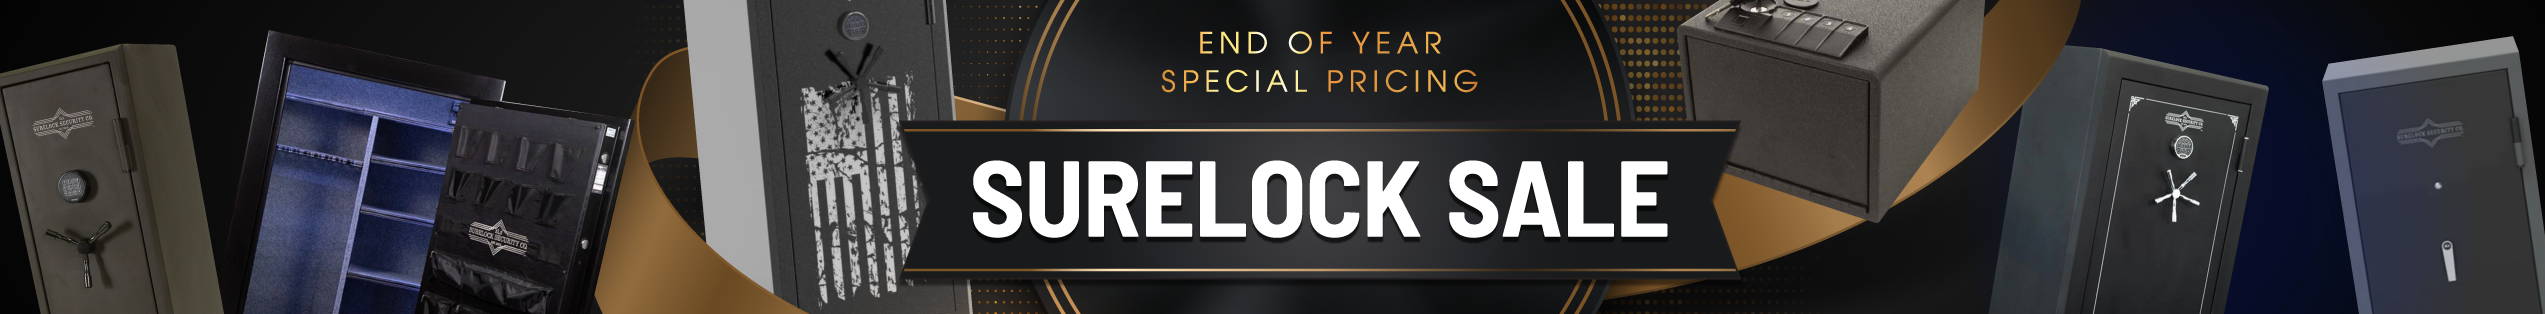 Surelock End of Year Sale